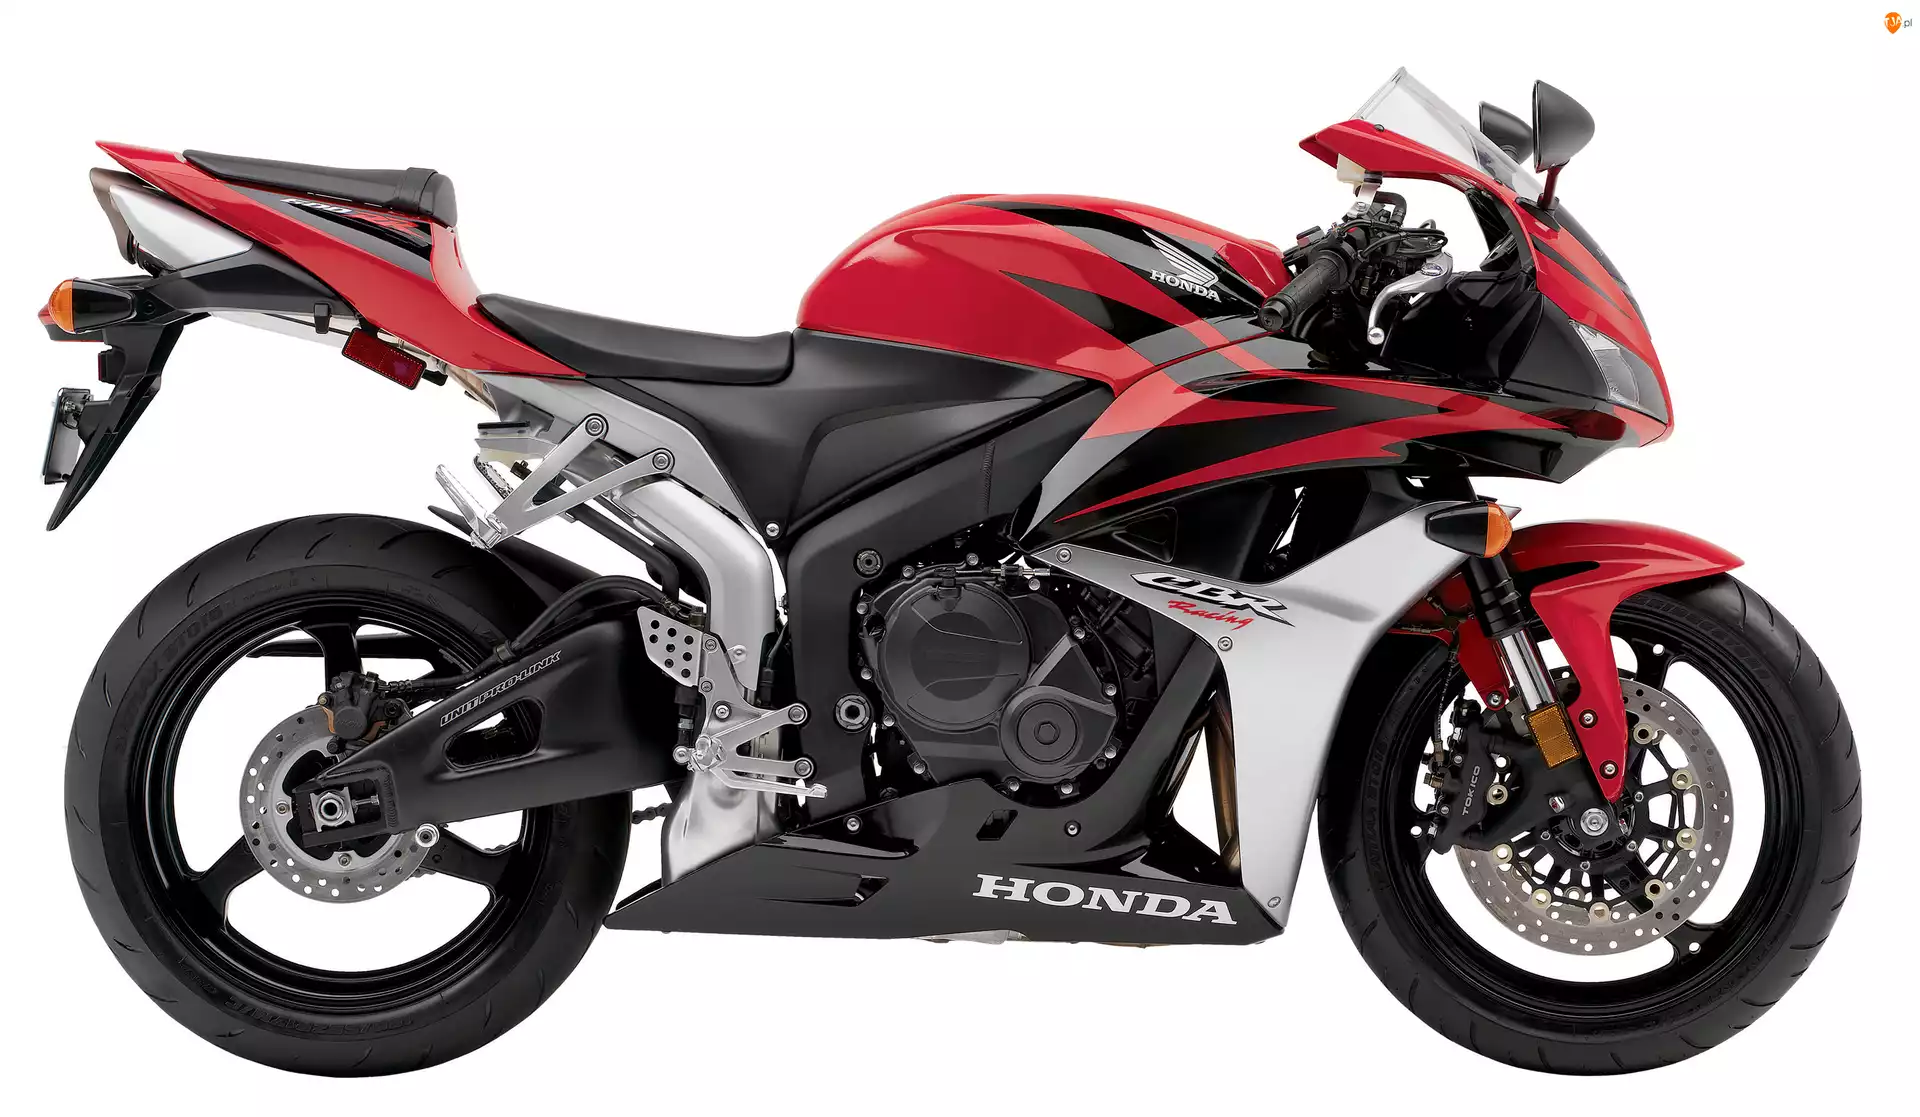 Motocykl Honda CBR600RR produkowany w latach 2007/